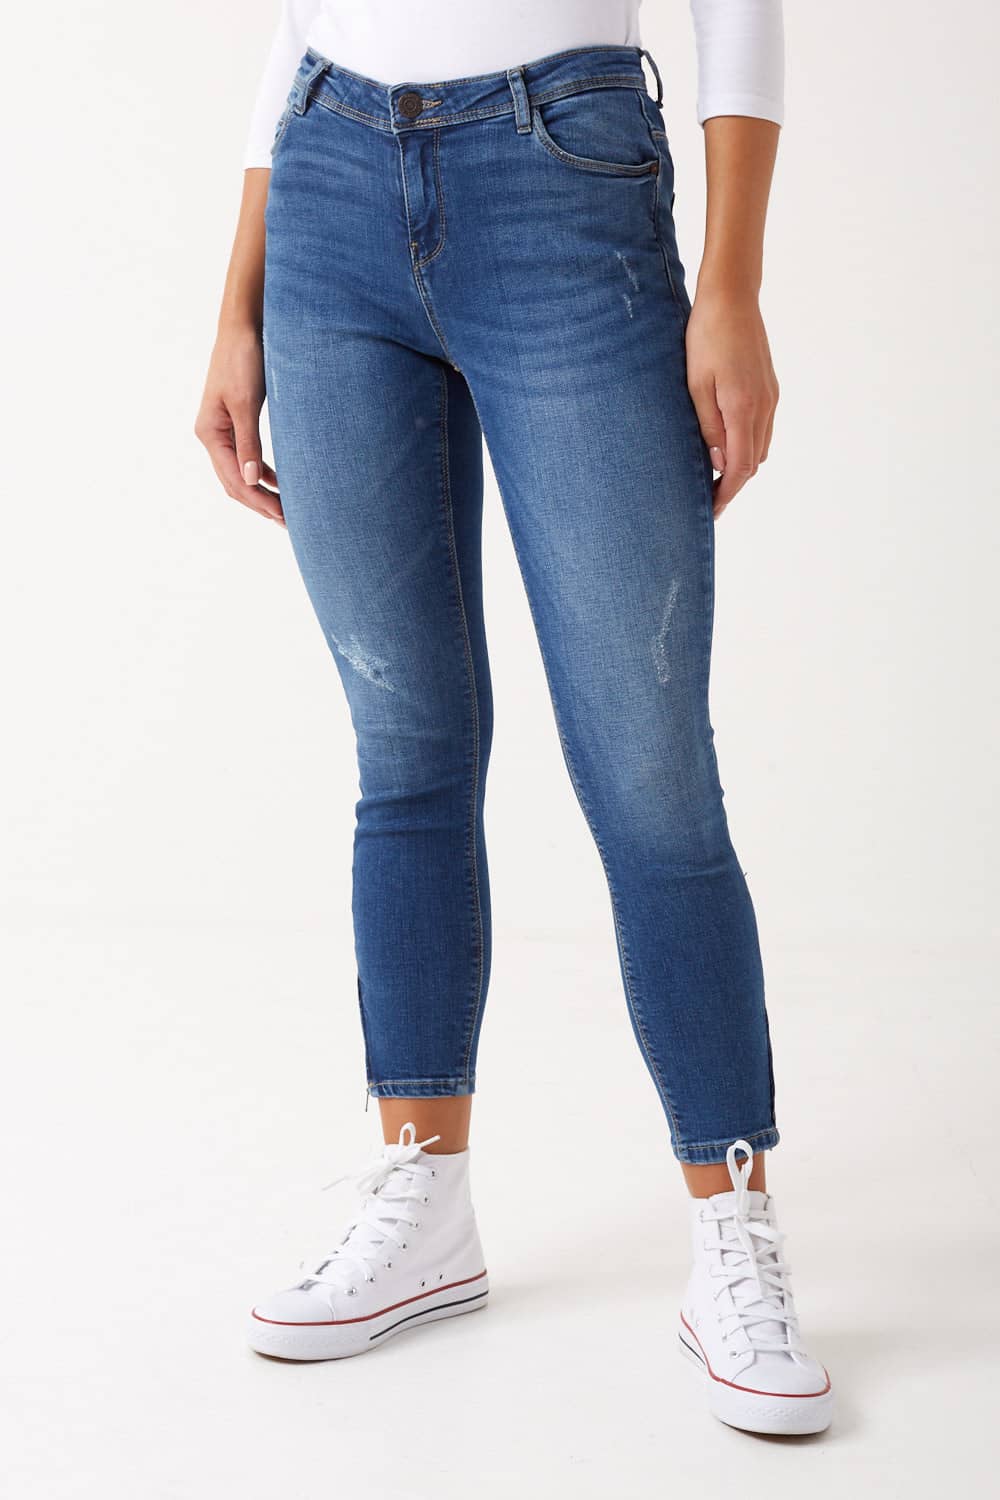 Noisy May Kimmy Ankle Zip Skinny Jeans in Medium Wash Denim | iCLOTHING ...